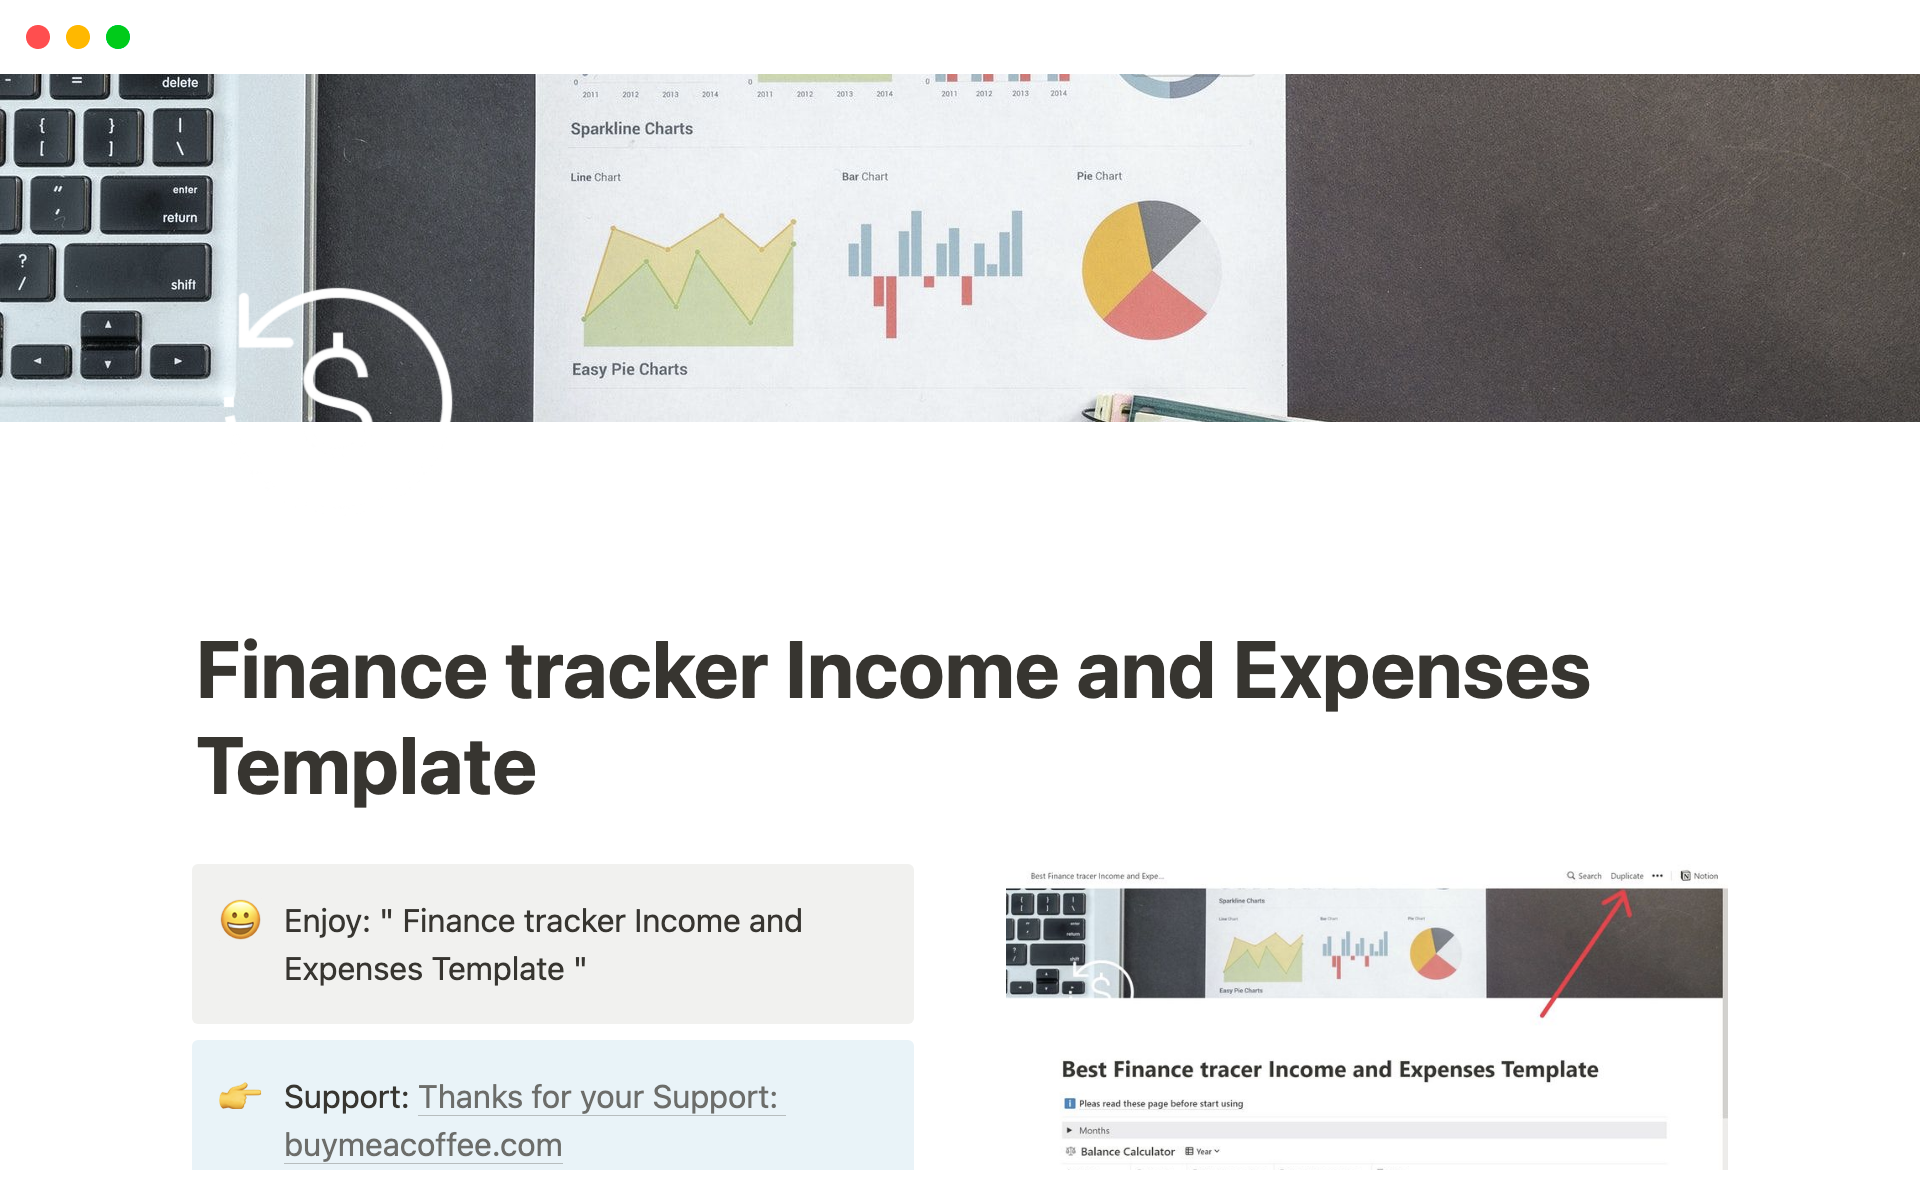 Finance tracker Income and Expenses Template님의 템플릿 미리보기